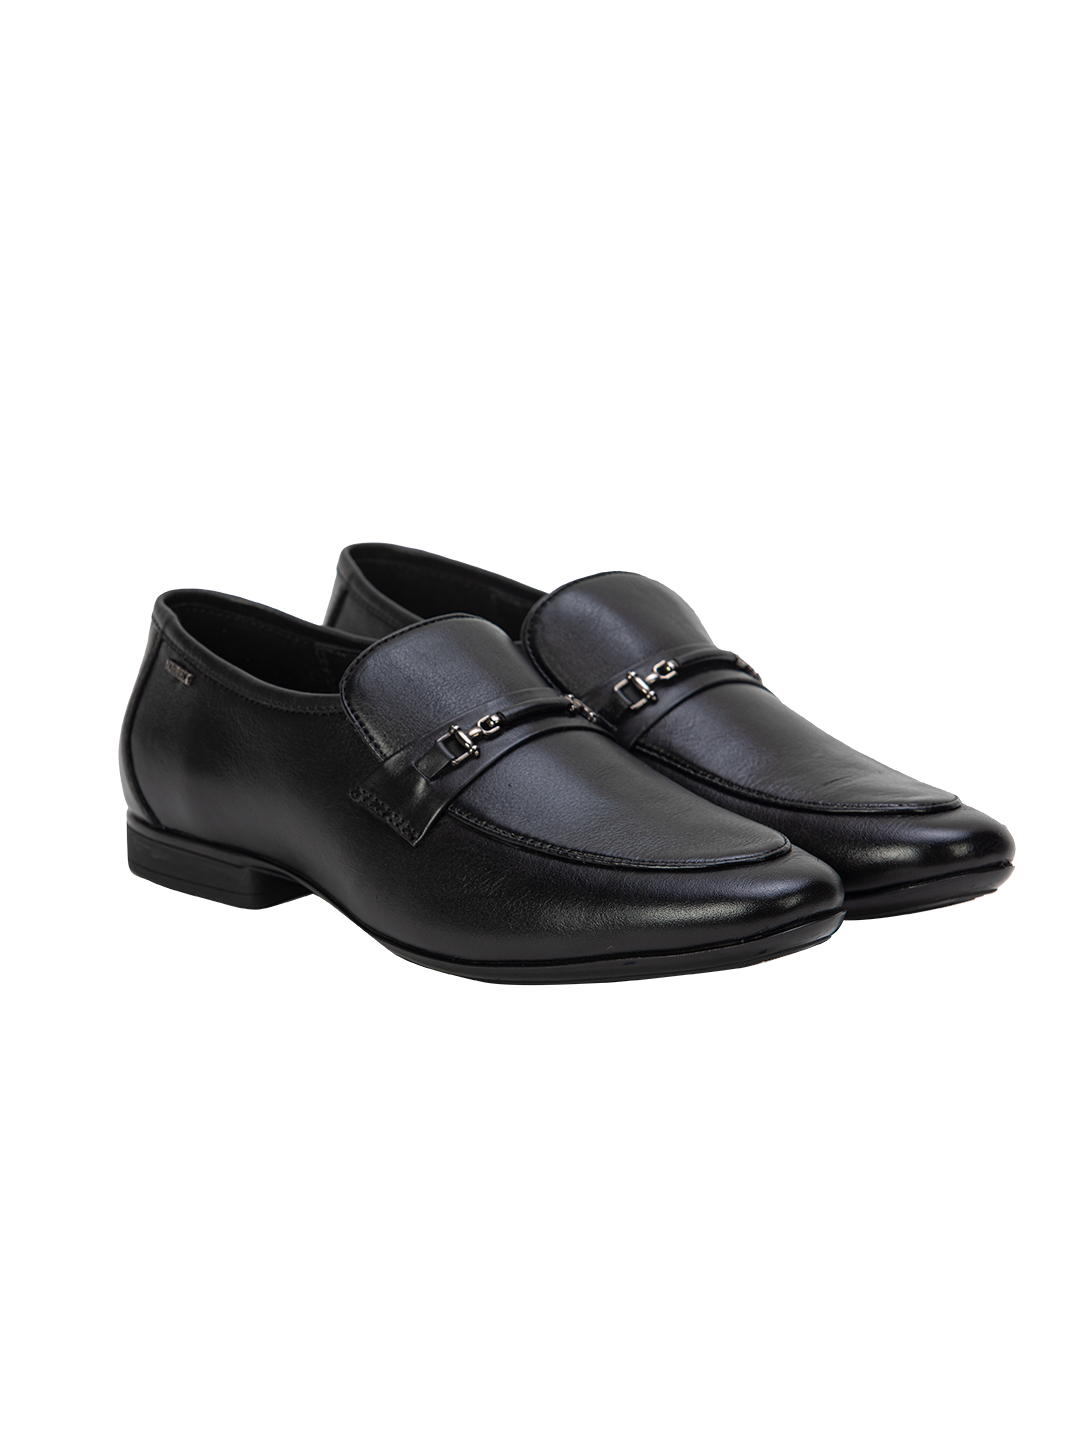 Buy Von Wellx Germany Comfort Black Glib Shoes Online in Faridabad